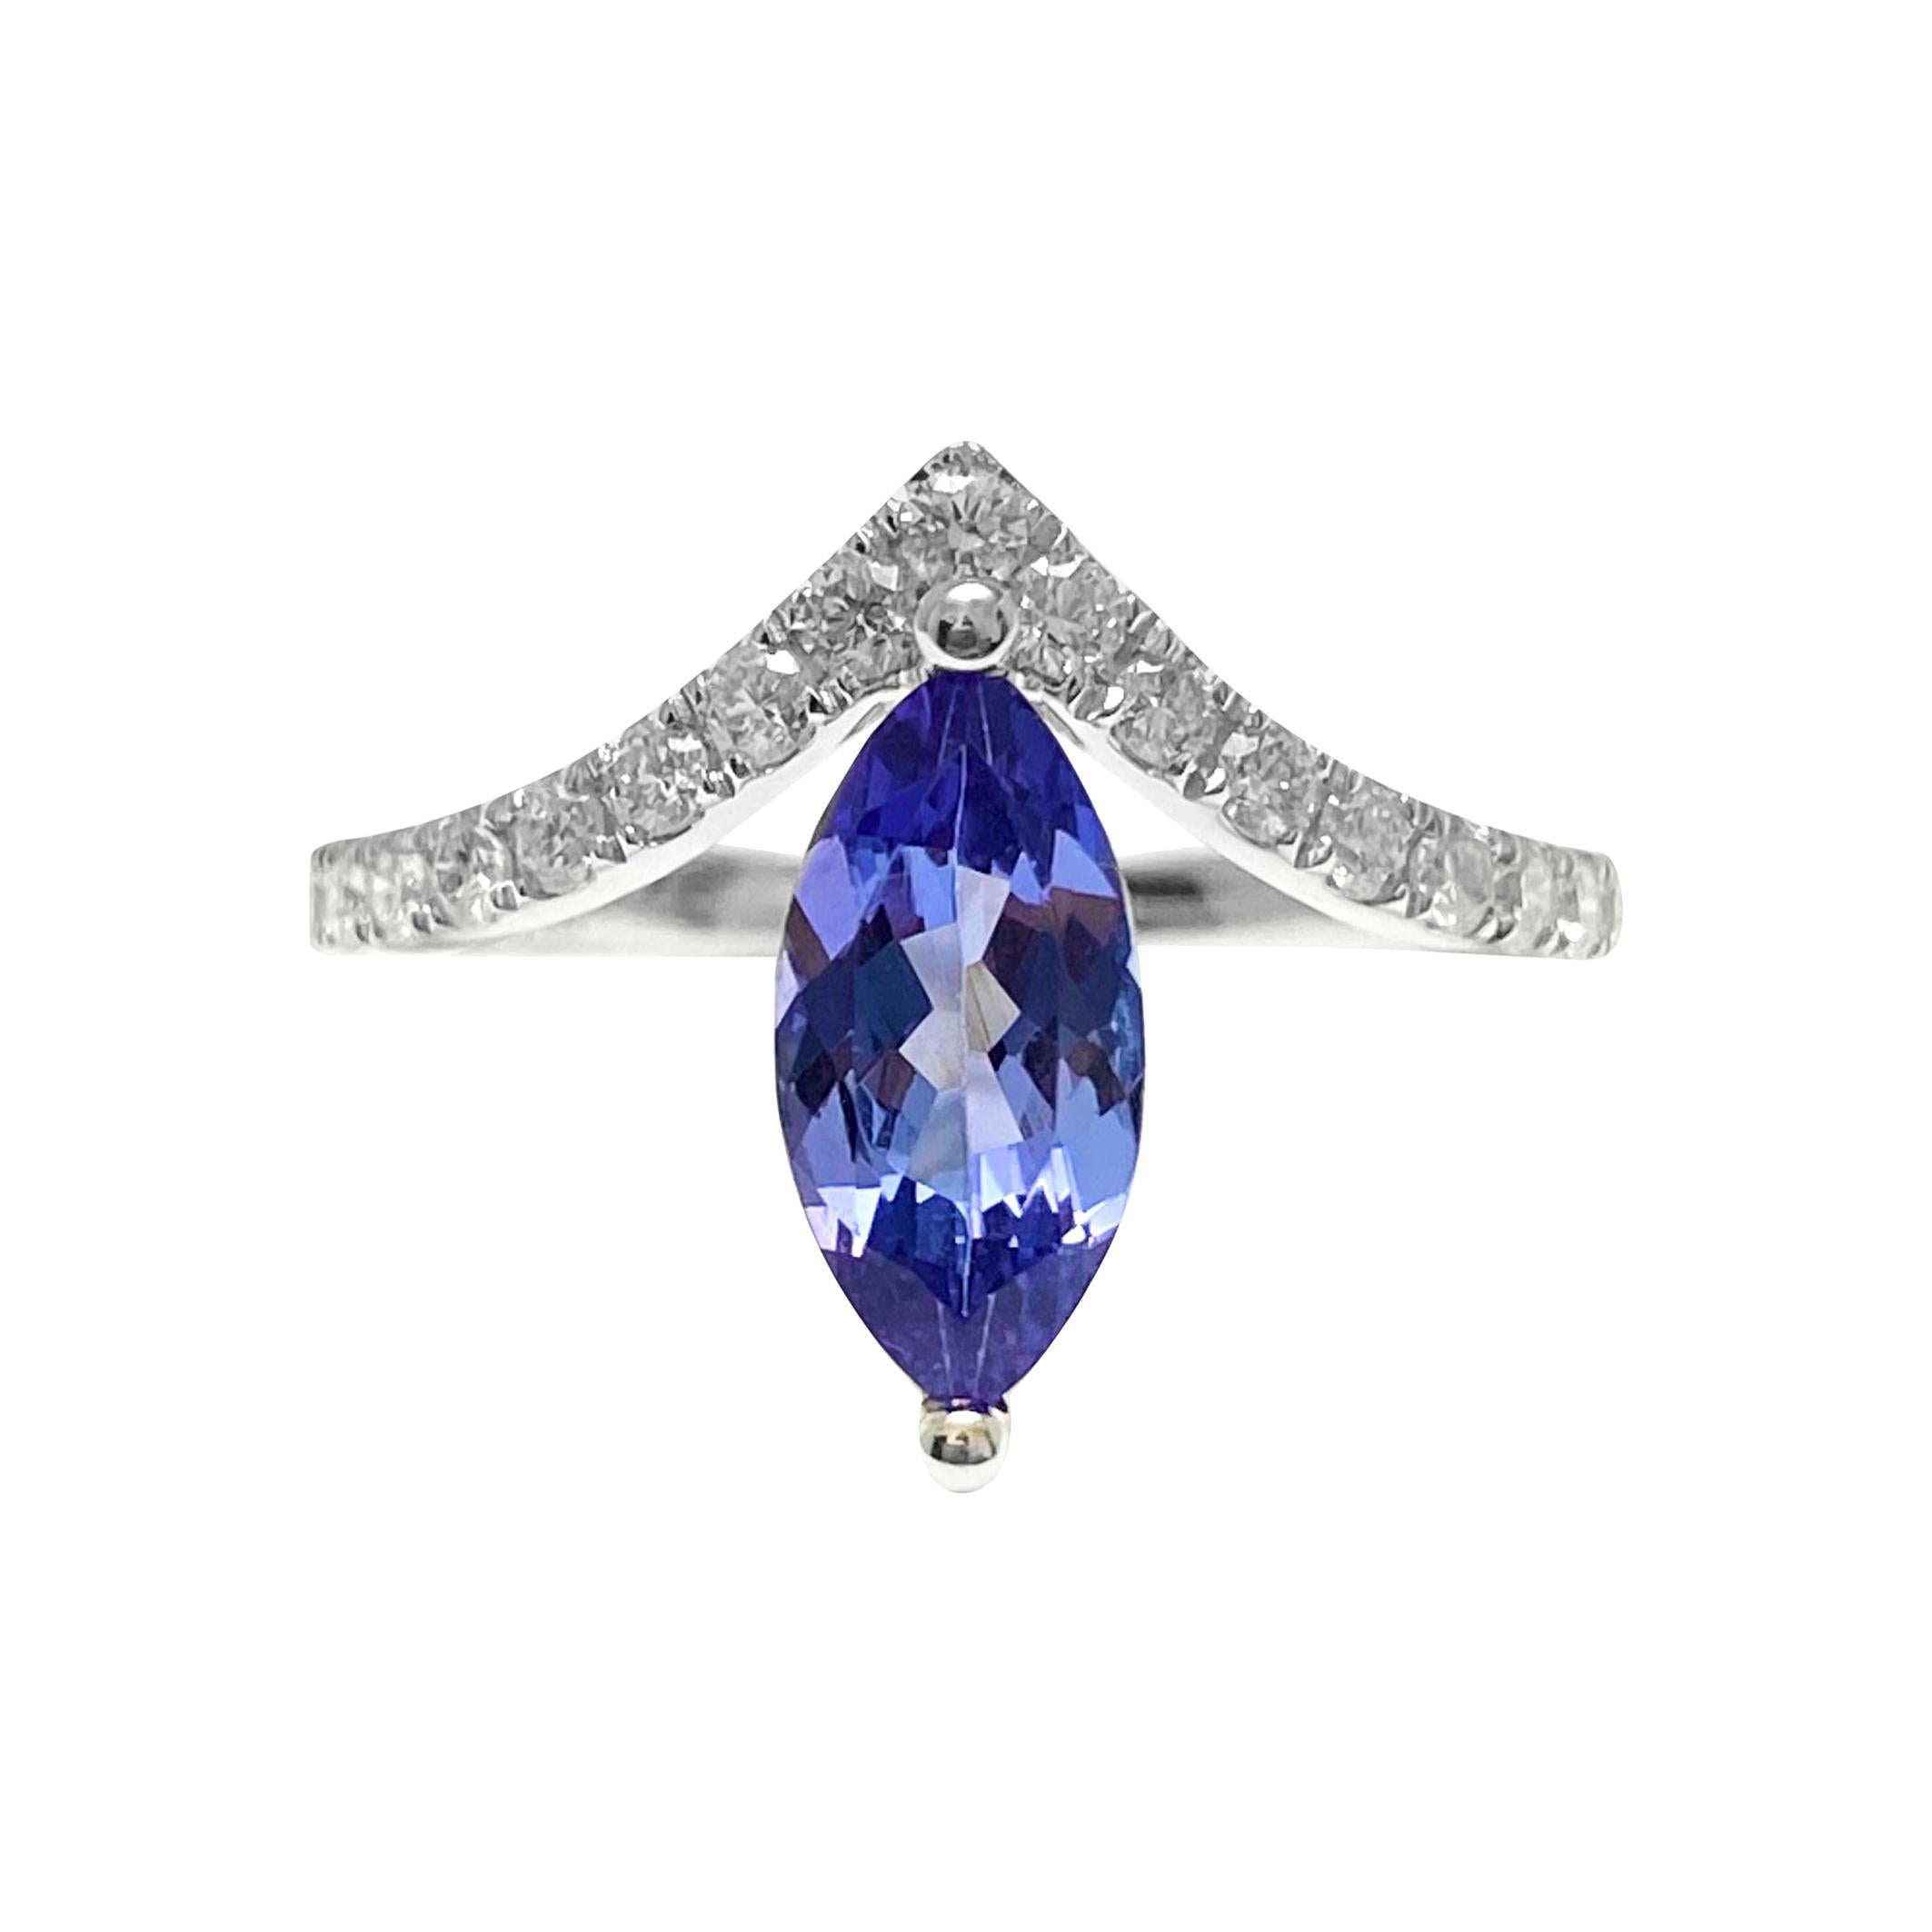 1.21 Carat Marquise-Cut Violet Tanzanite and Diamond 18k White Gold "V" Ring